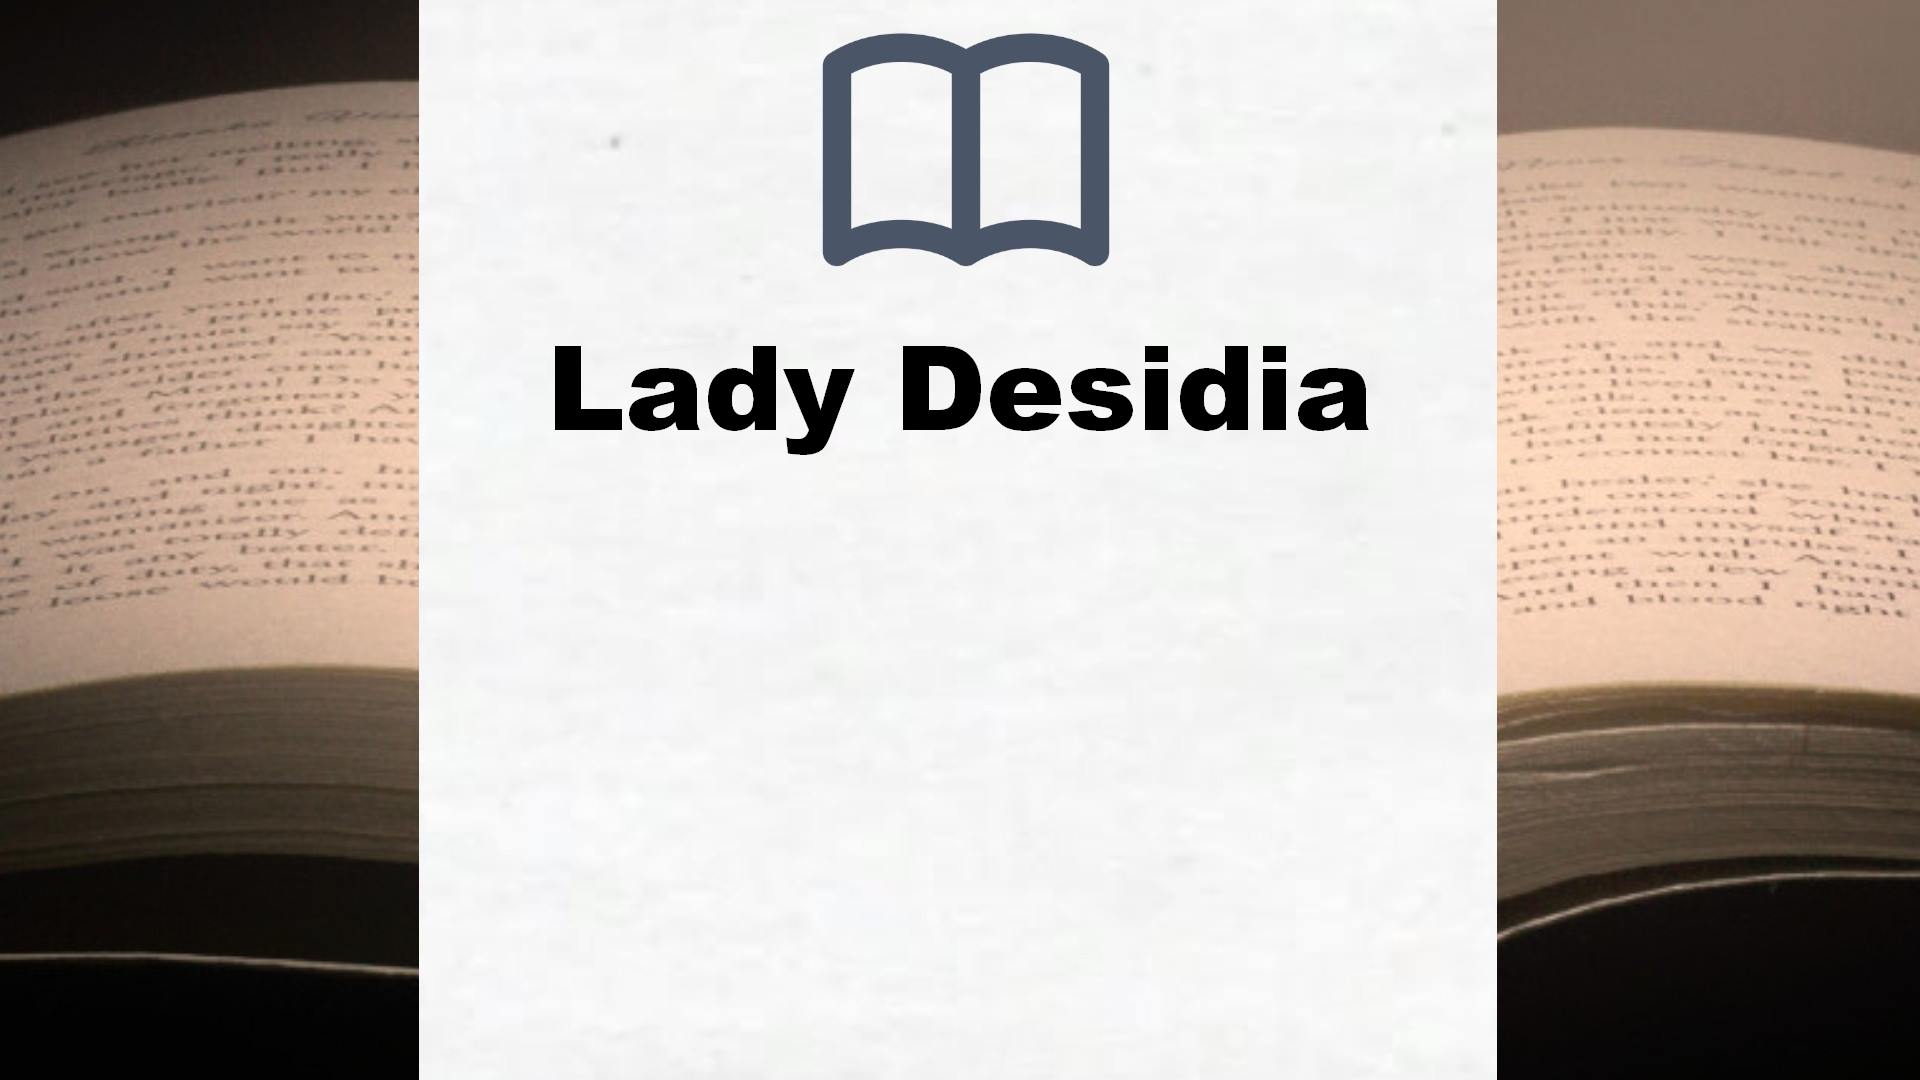 Libros Lady Desidia